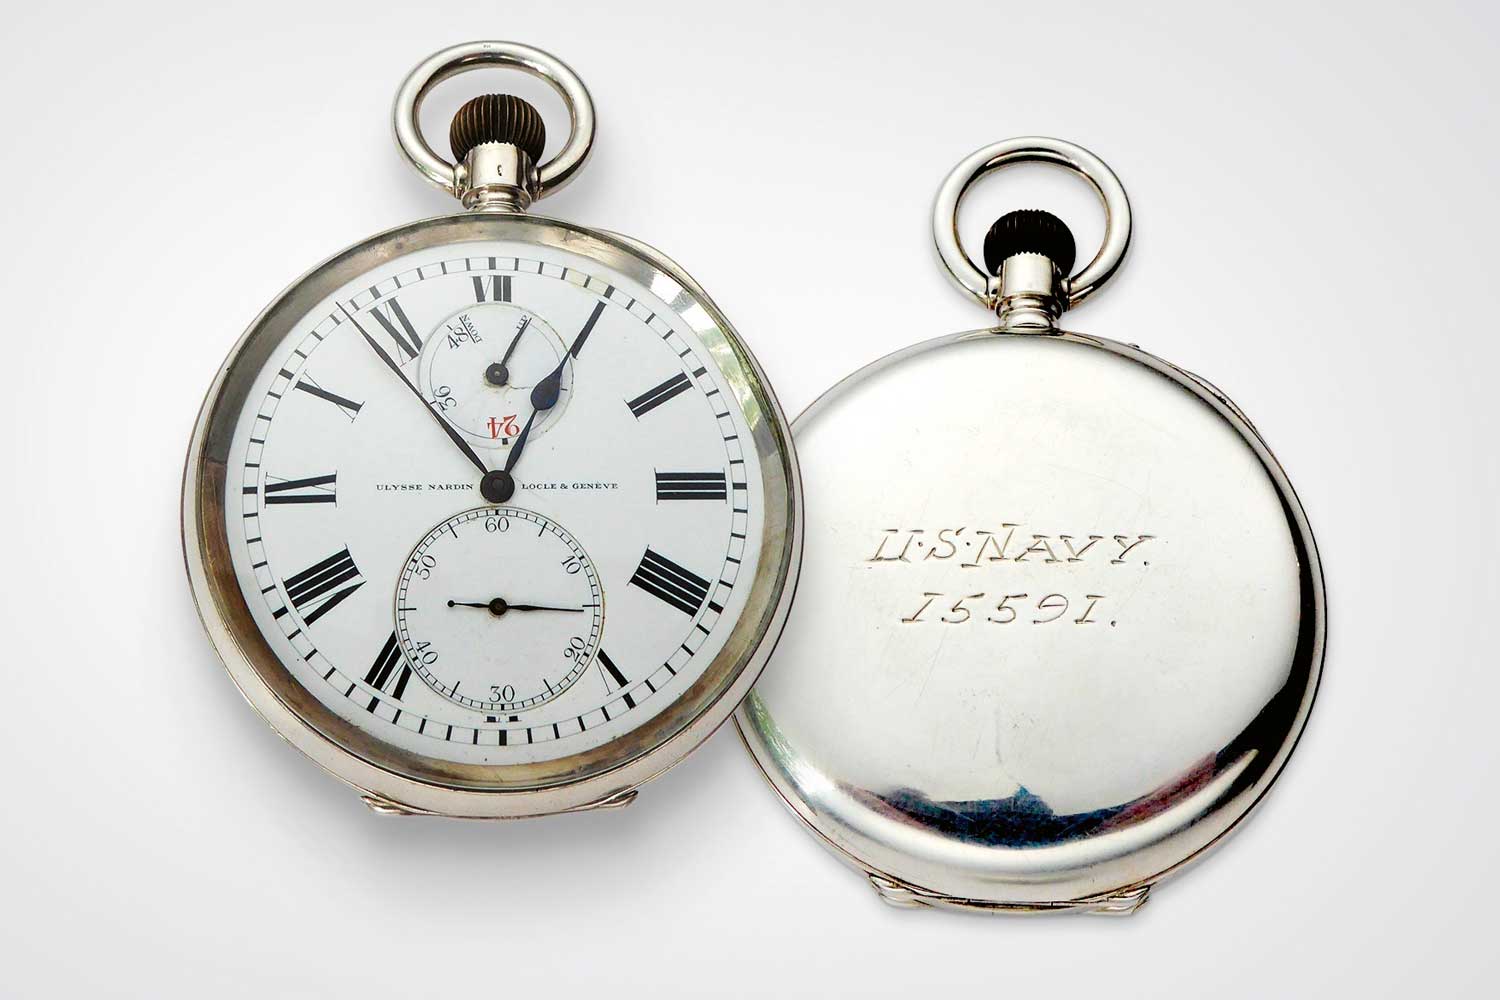 Ulysse Nardin Chronometer Pocket Watch made for the US Navy